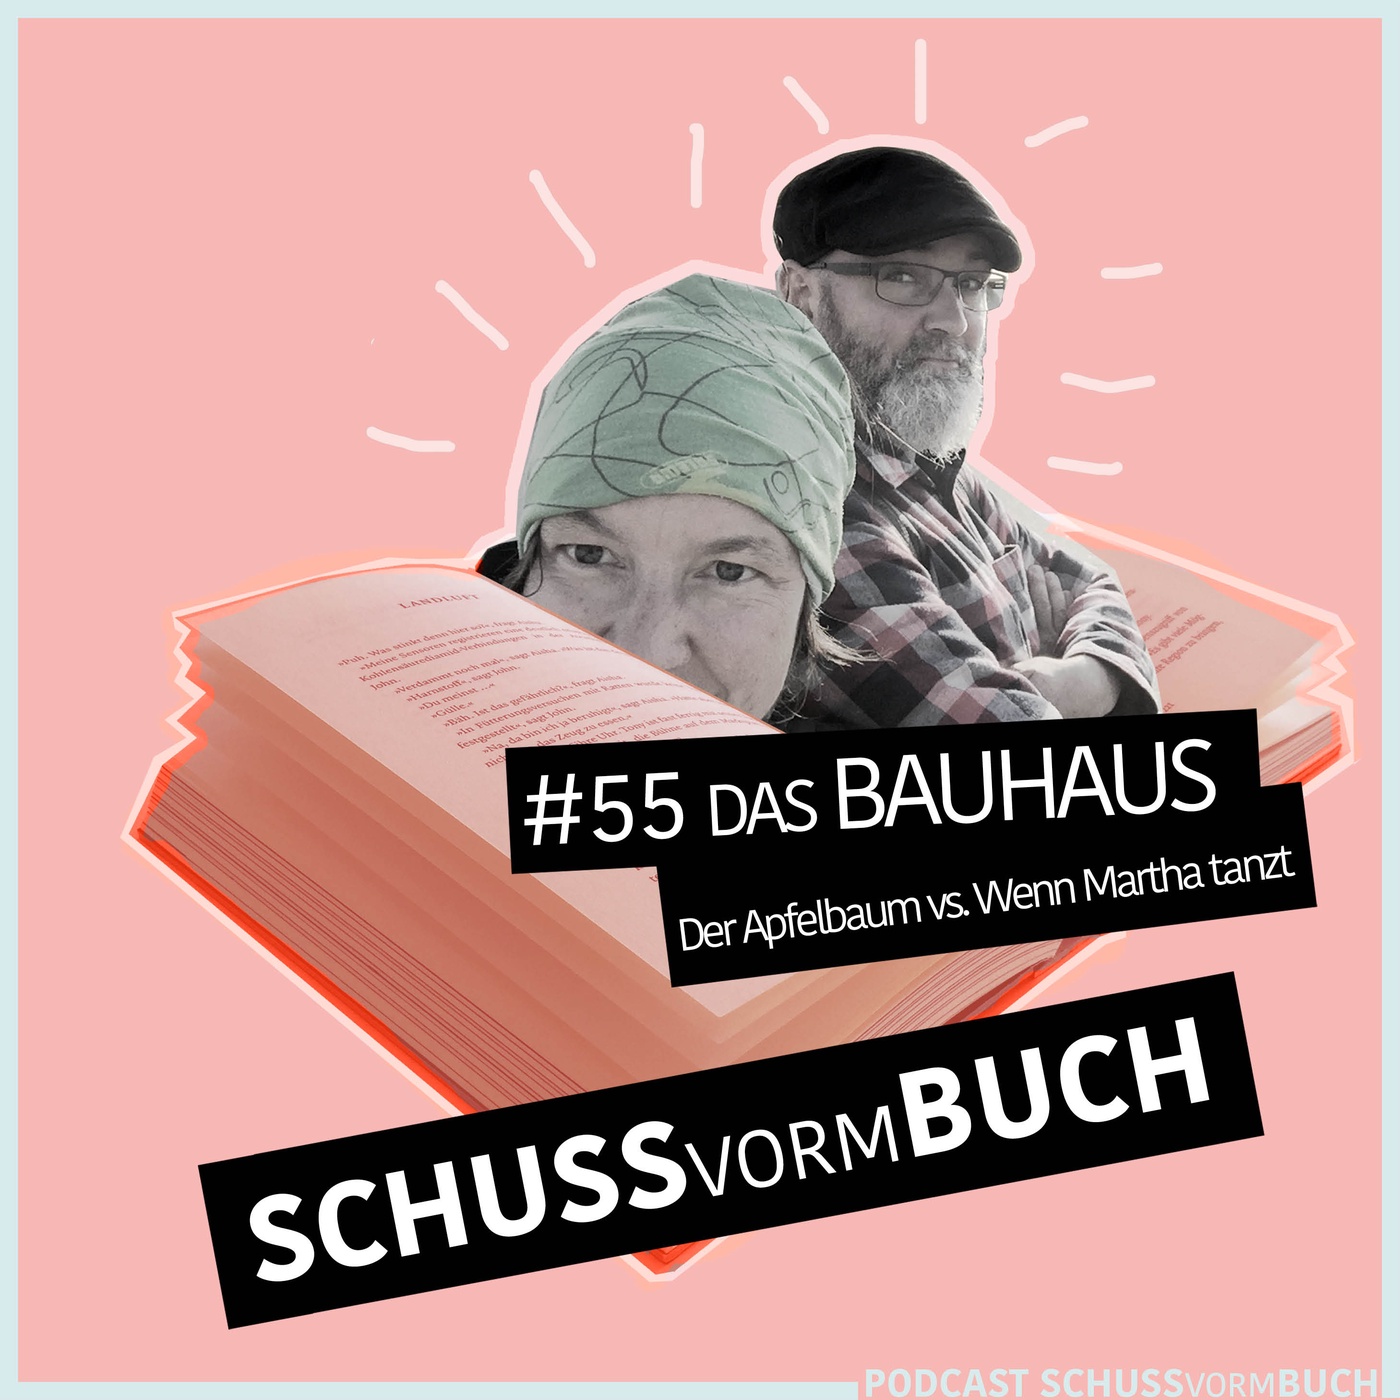 #55 - Das Bauhaus: Christian Berkel vs. Tom Saller